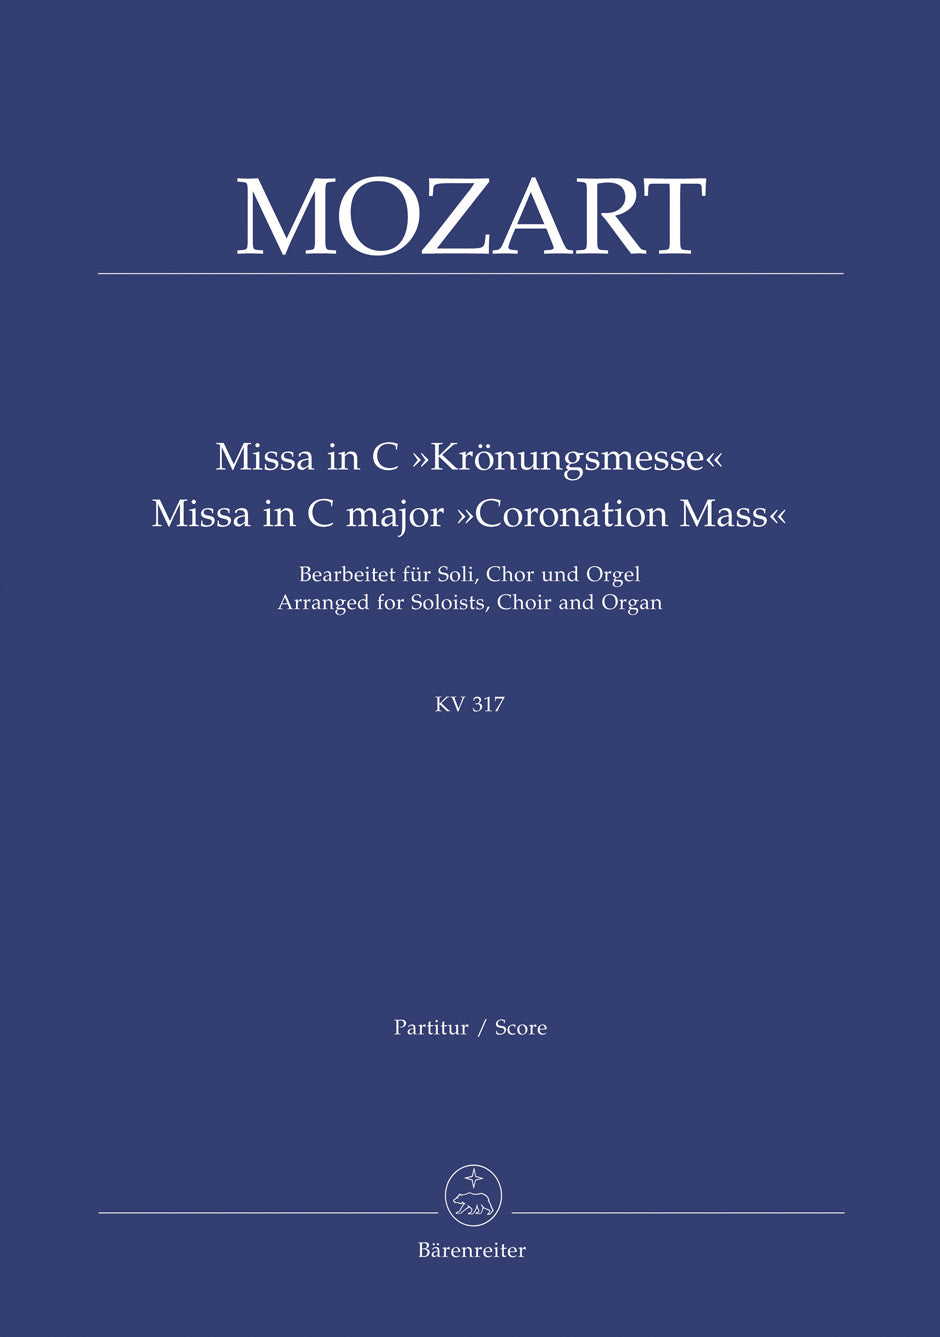 Mozart Missa C major K. 317 "Coronation Mass" (Arranged for Soloists, Choir and Organ)